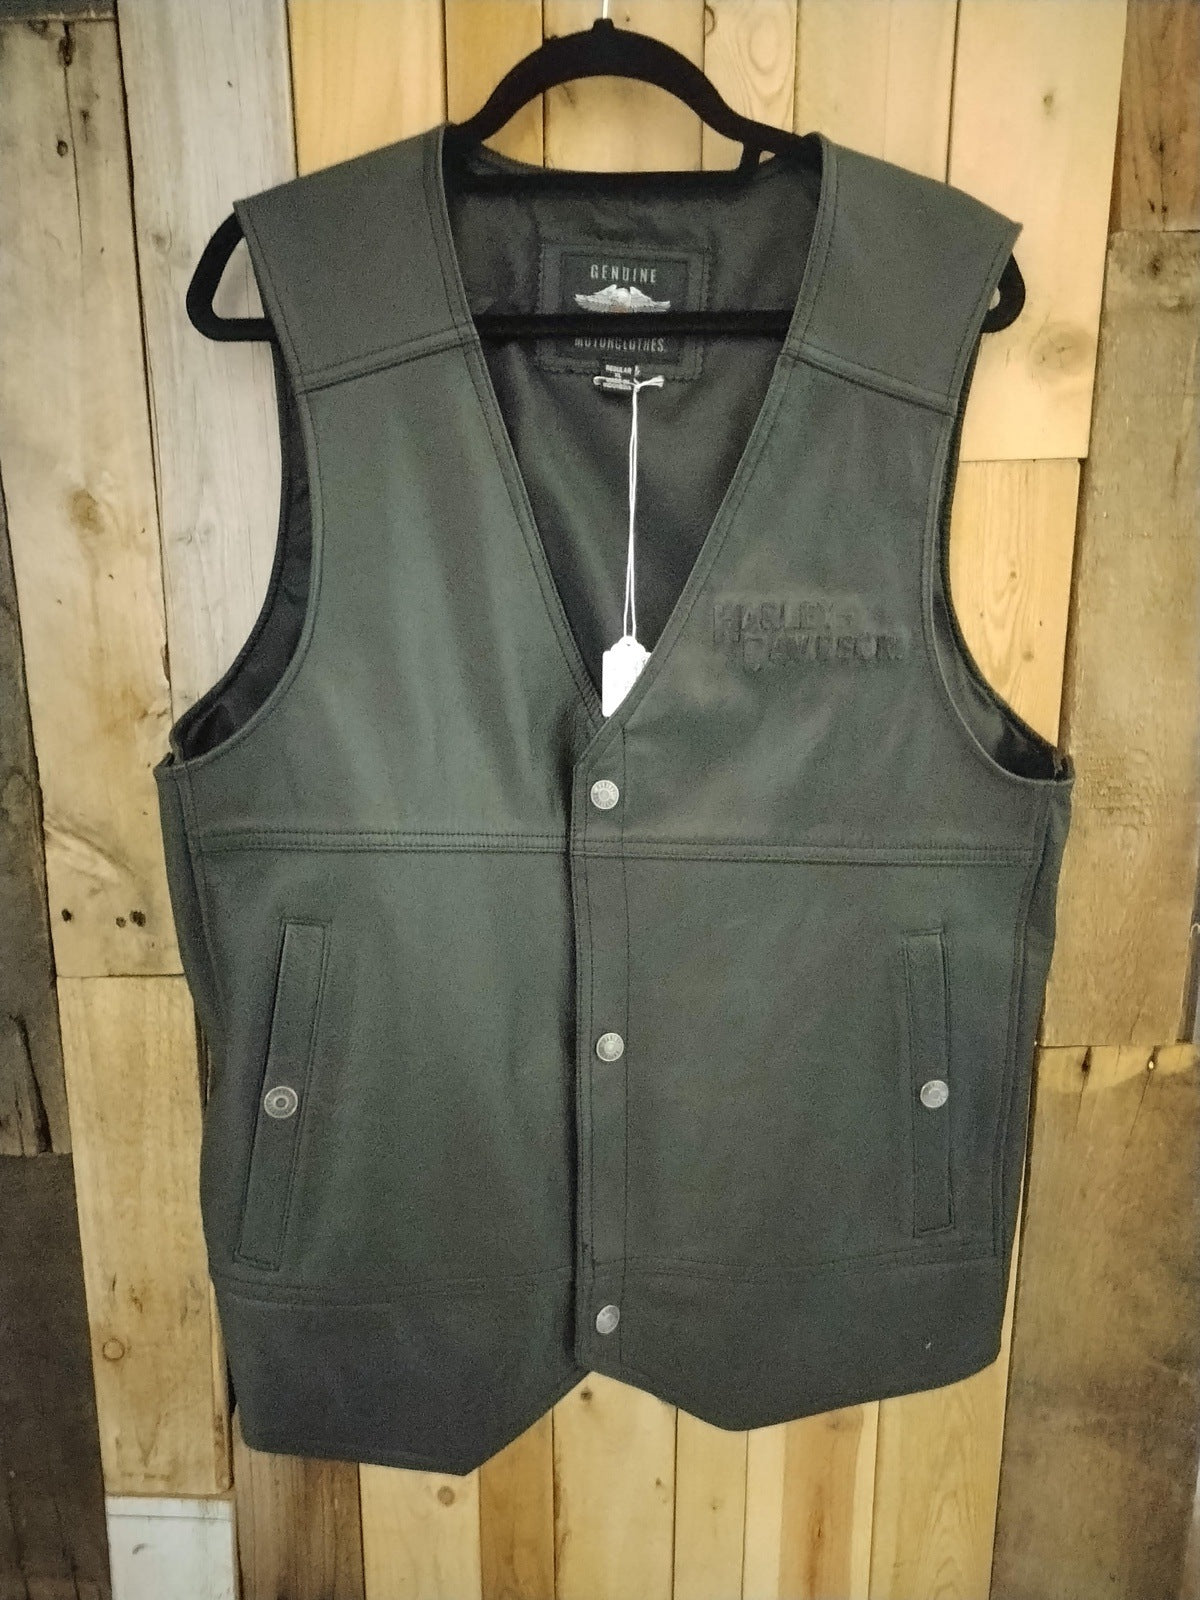 Harley Davidson Official Merchandise Men's Leather Vest Size XL